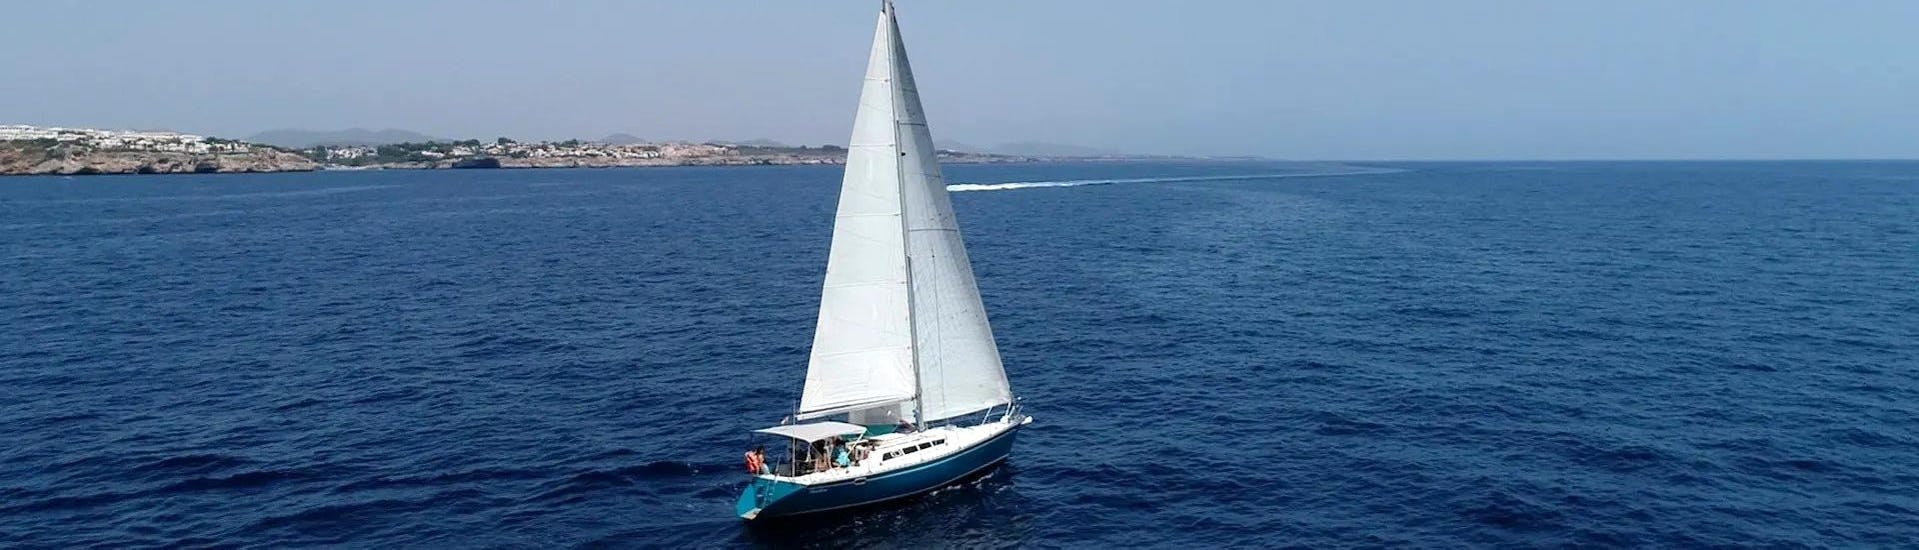 Notre voilier Malakai naviguant dans la mer avec Sailing Porto Cristo.